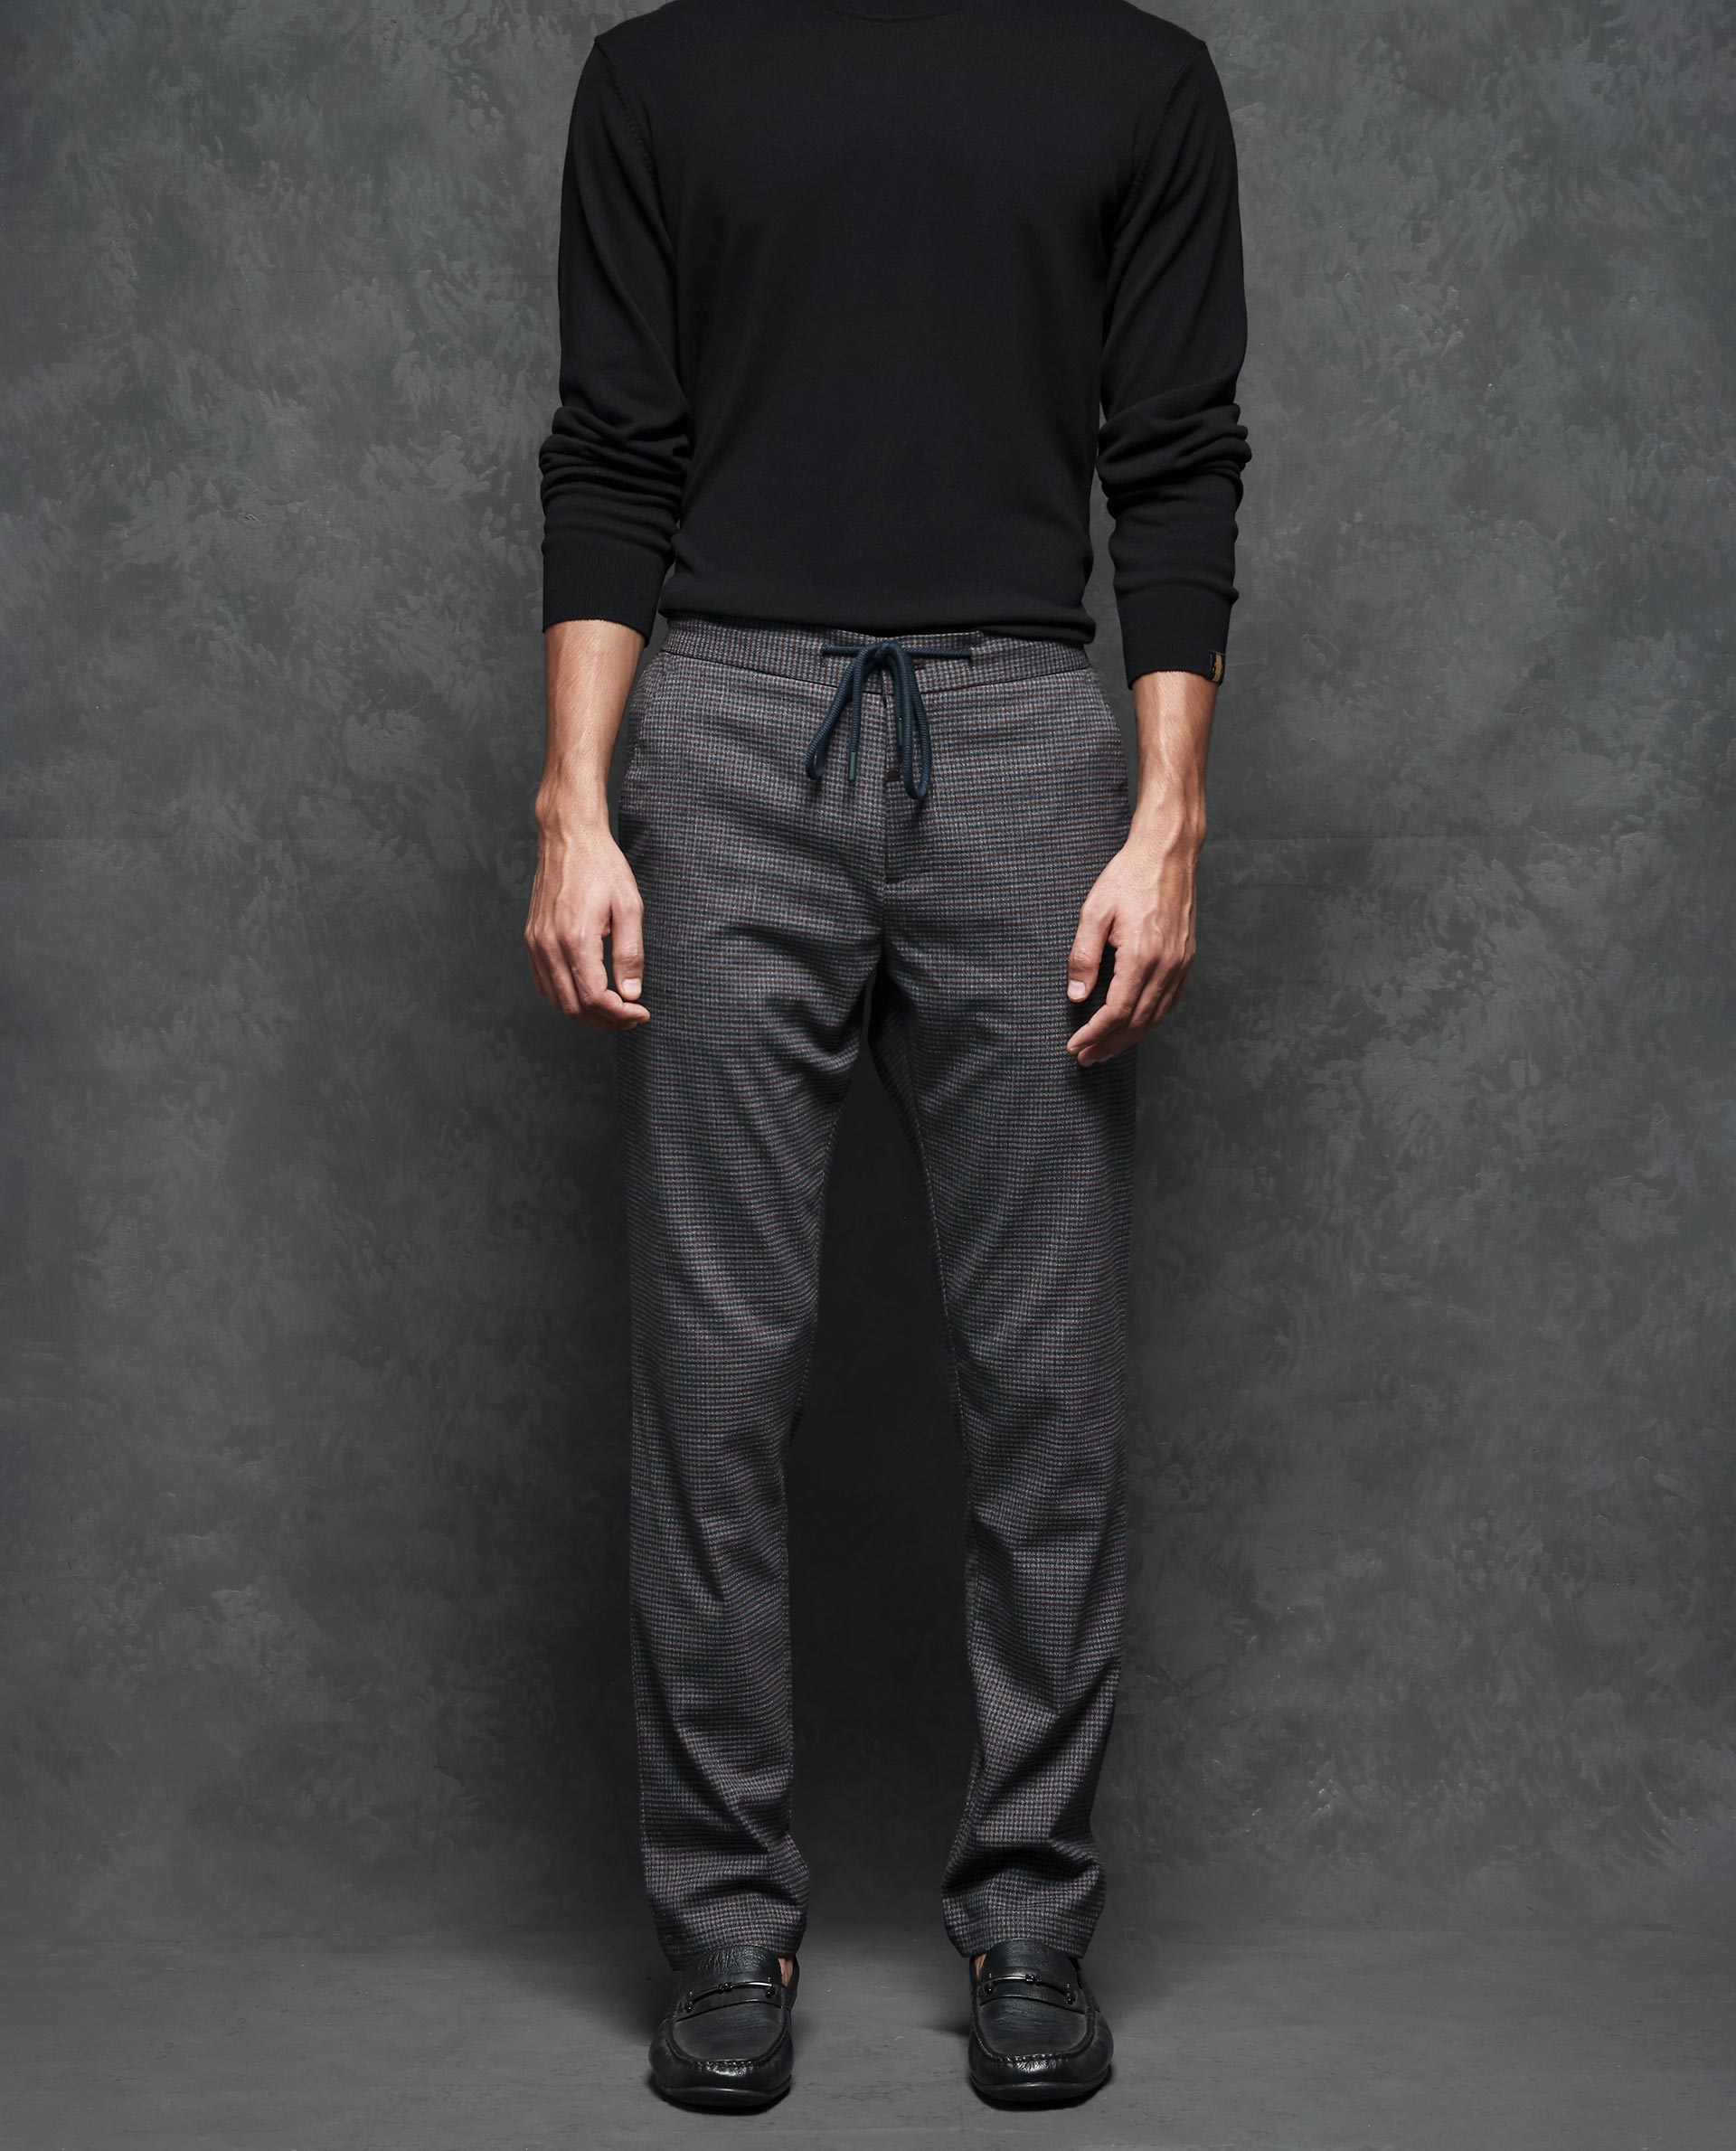 Dark Gray Men'S Pants Men's Daily Casual Solid Full Length Pants Slim  Pocket Zipper Fly Pant Trouser - Walmart.com